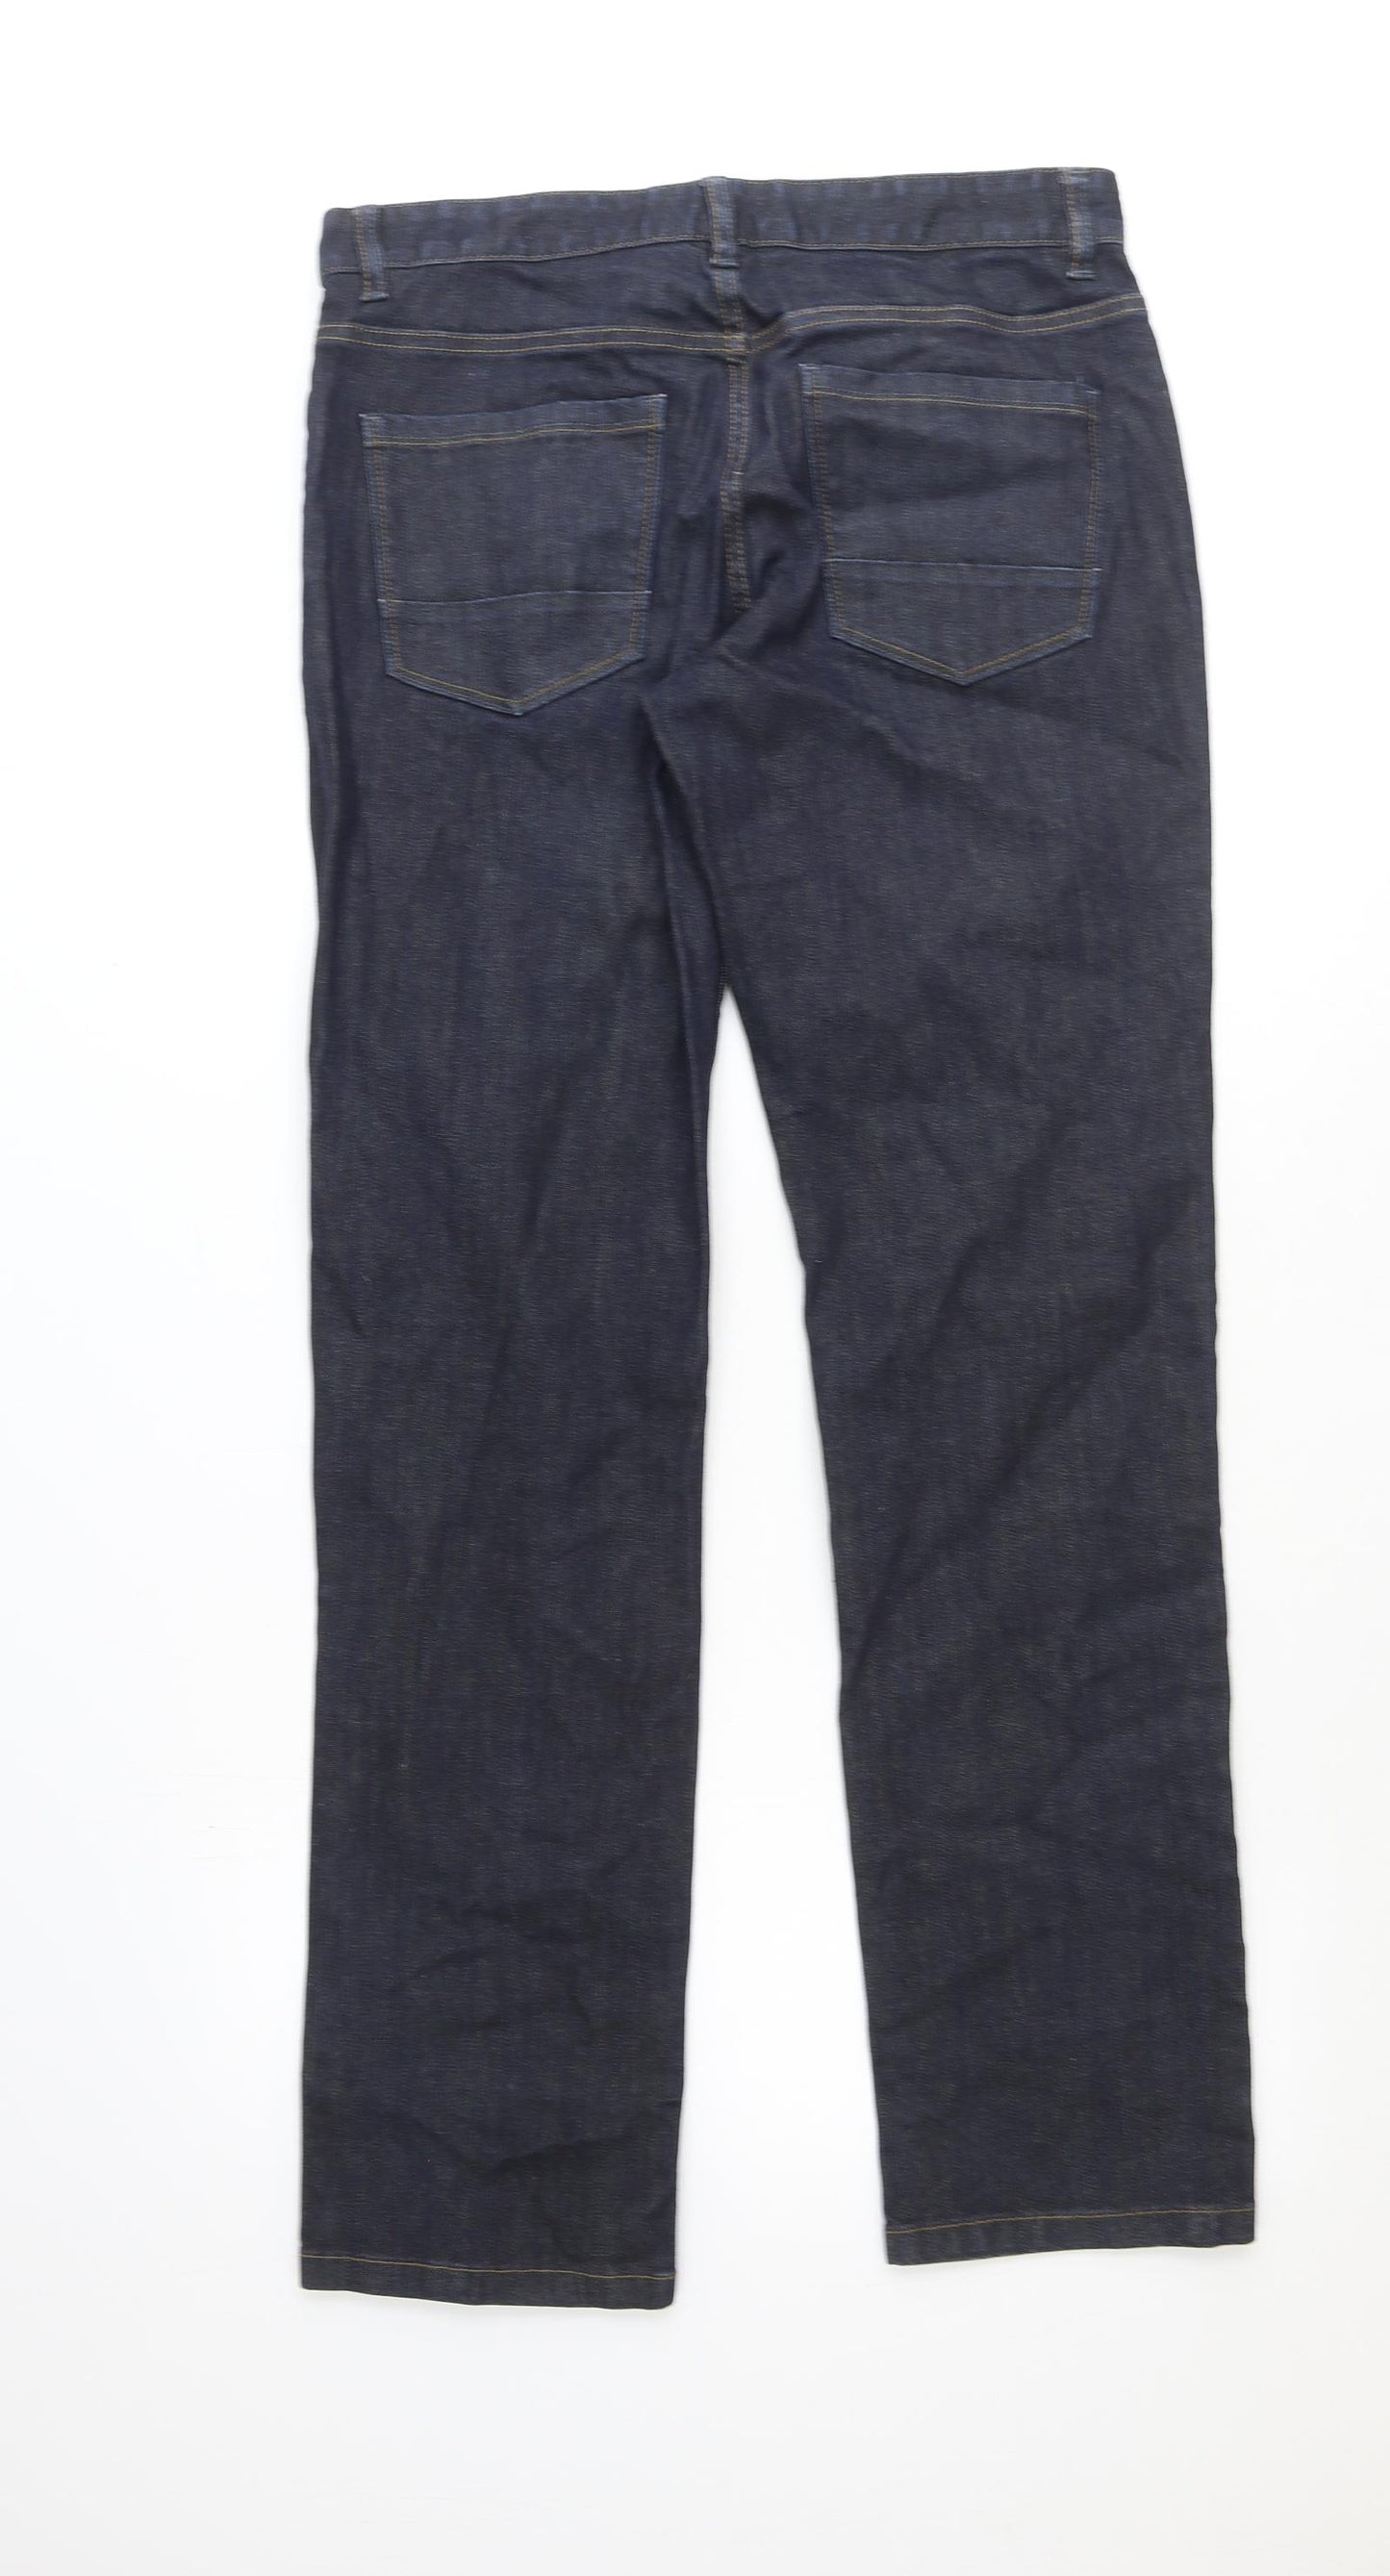 NEXT Mens Blue Cotton Skinny Jeans Size 32 in Regular Zip